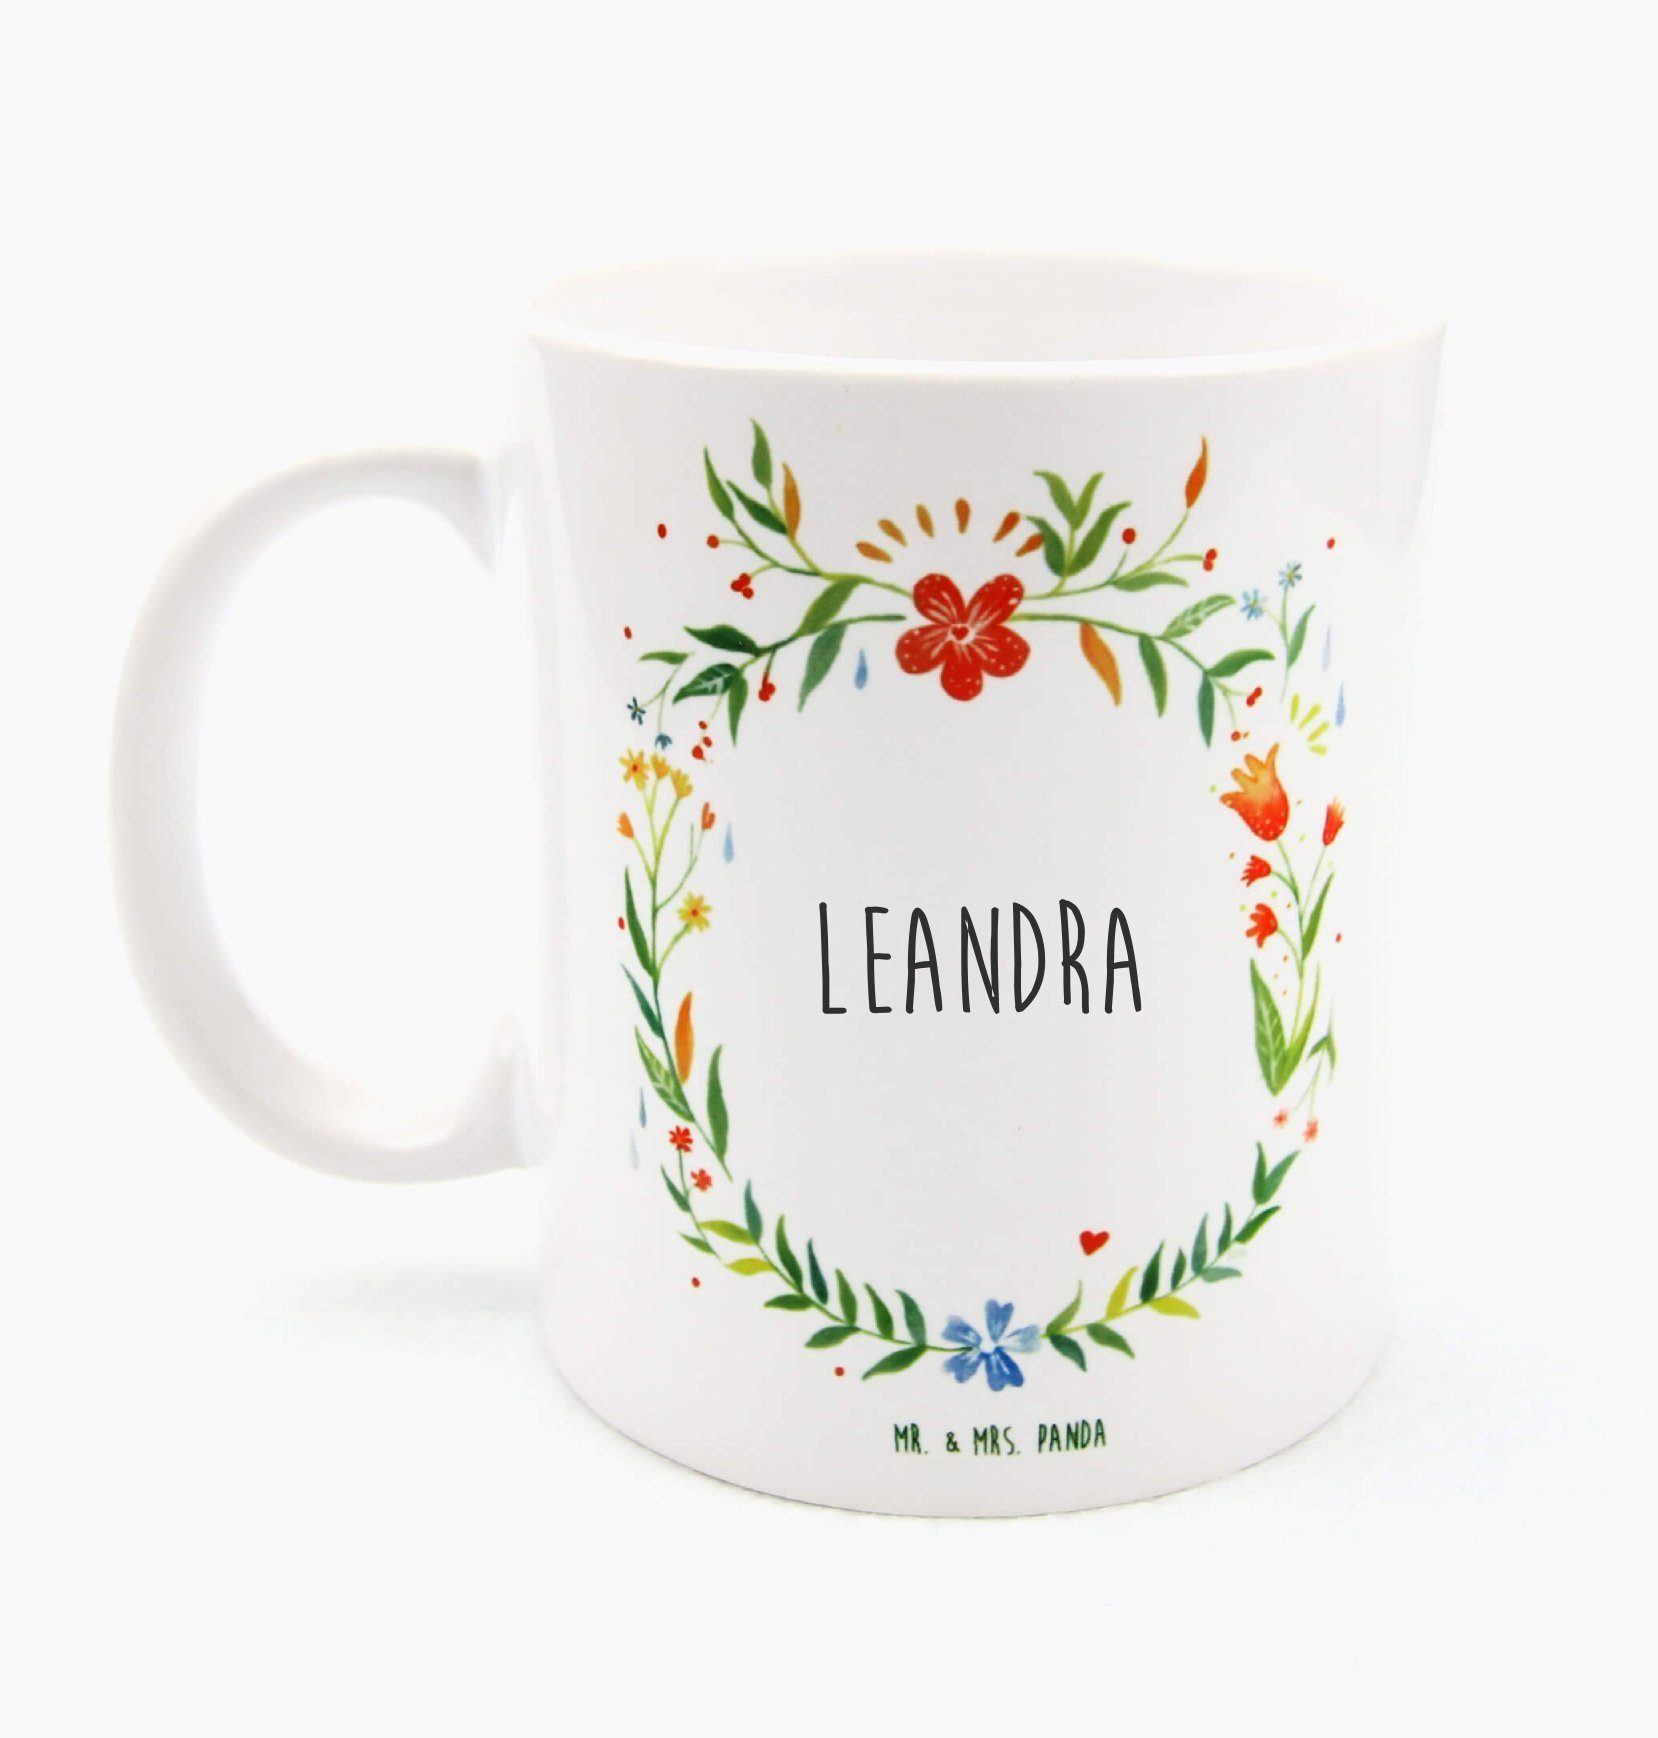 Tasse Motive, Mrs. Mr. - Teebecher, & Sprüche, Geschenk, Tasse Tasse Teetasse, Leandra Panda Keramik